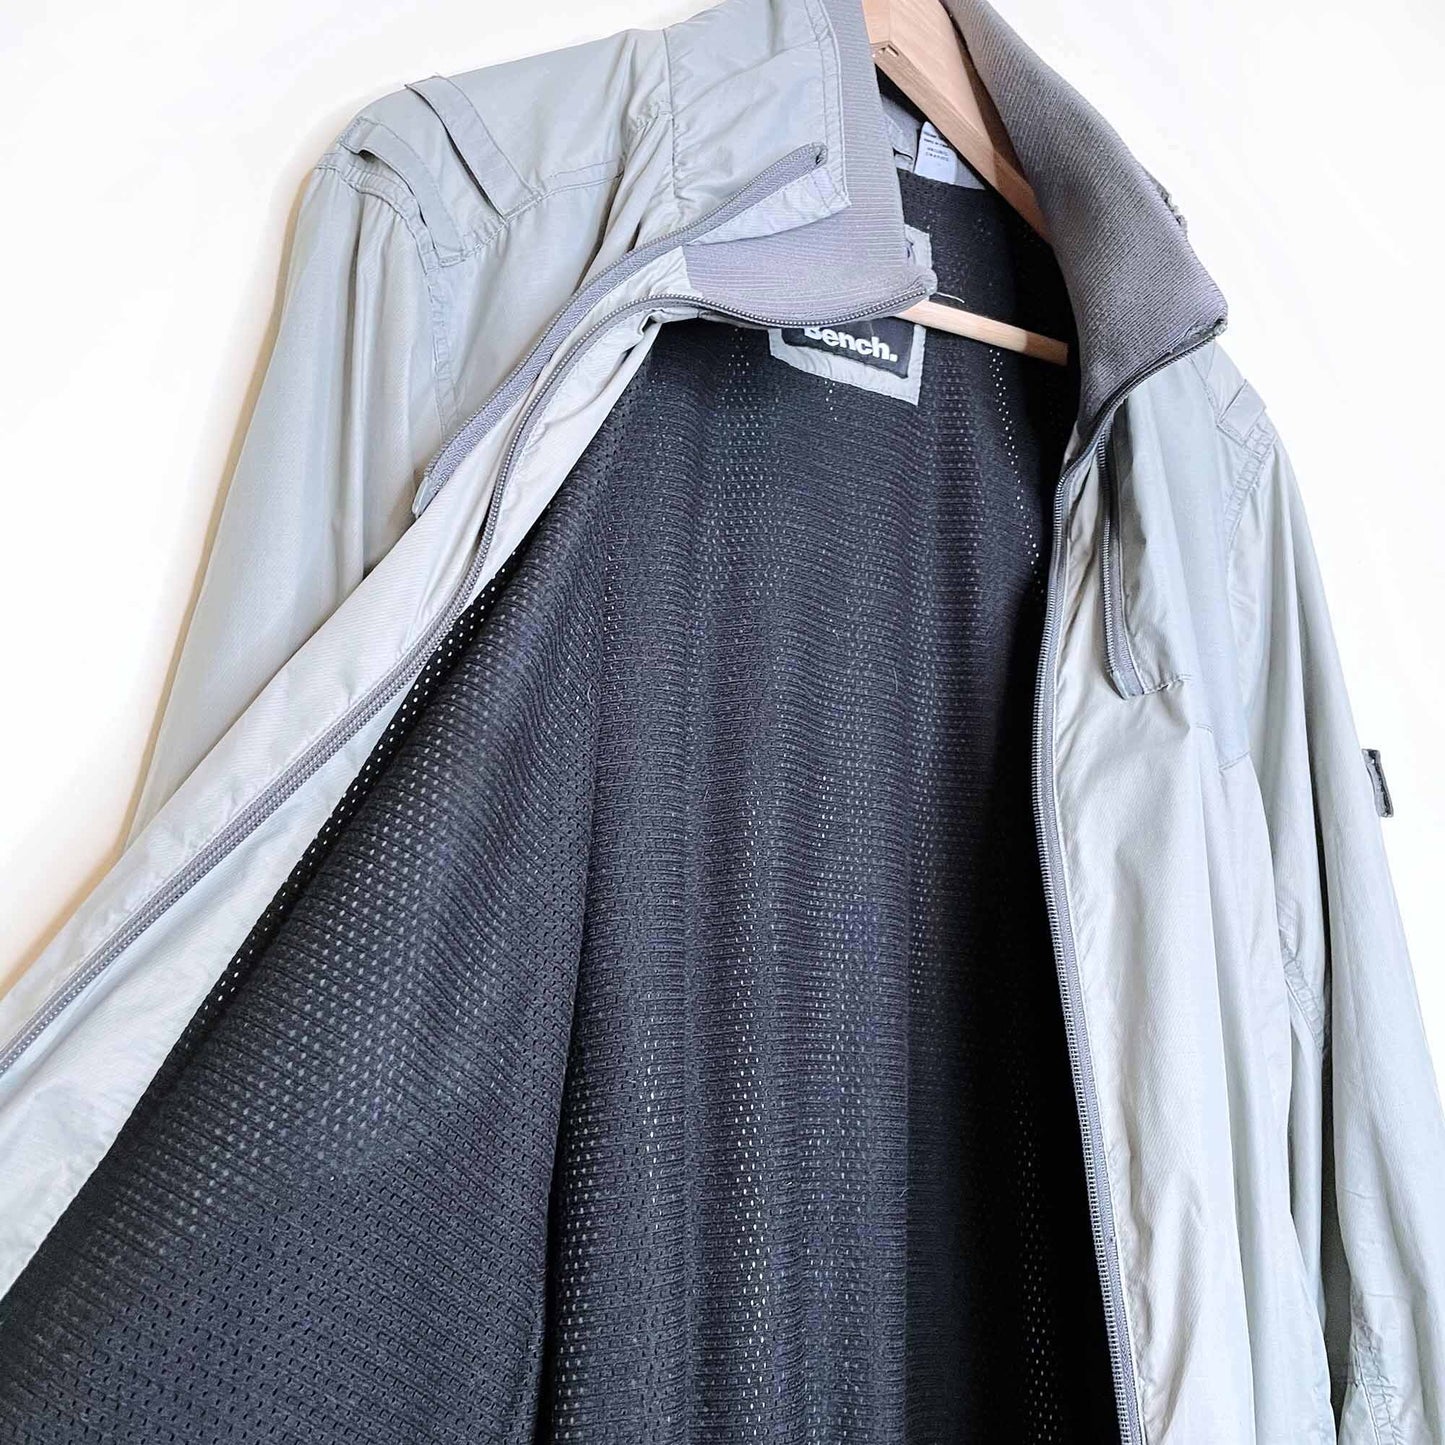 bench grey lined utility bomber jacket - size xl